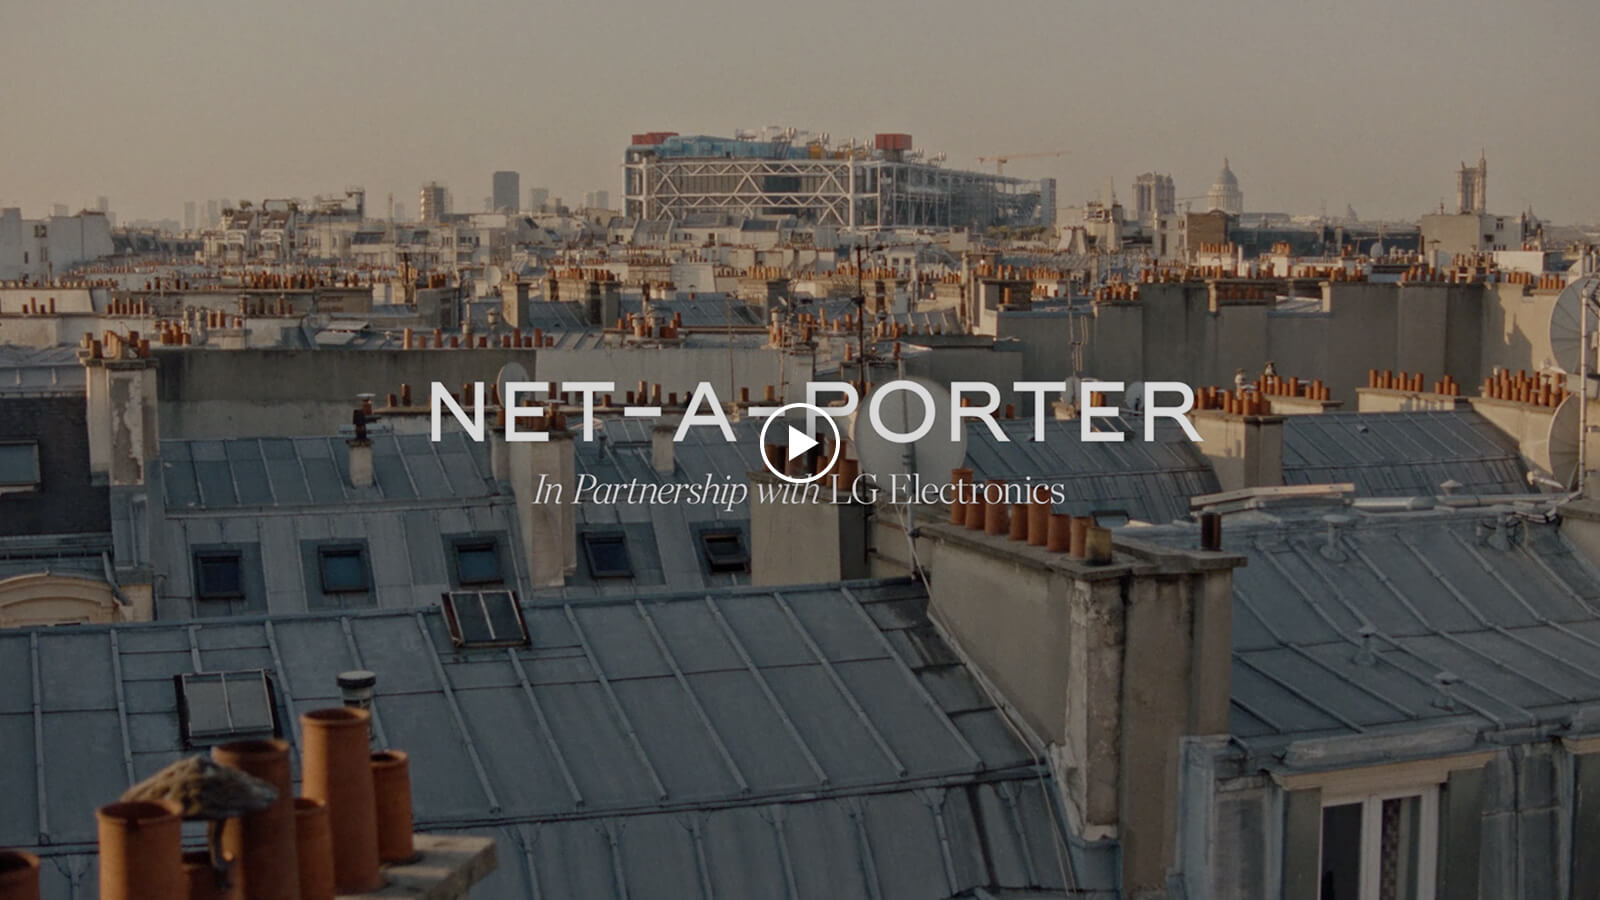 Tytuł filmu „NET-A-PORTER we współpracy z LG Electronics” został napisany na tle Europy.